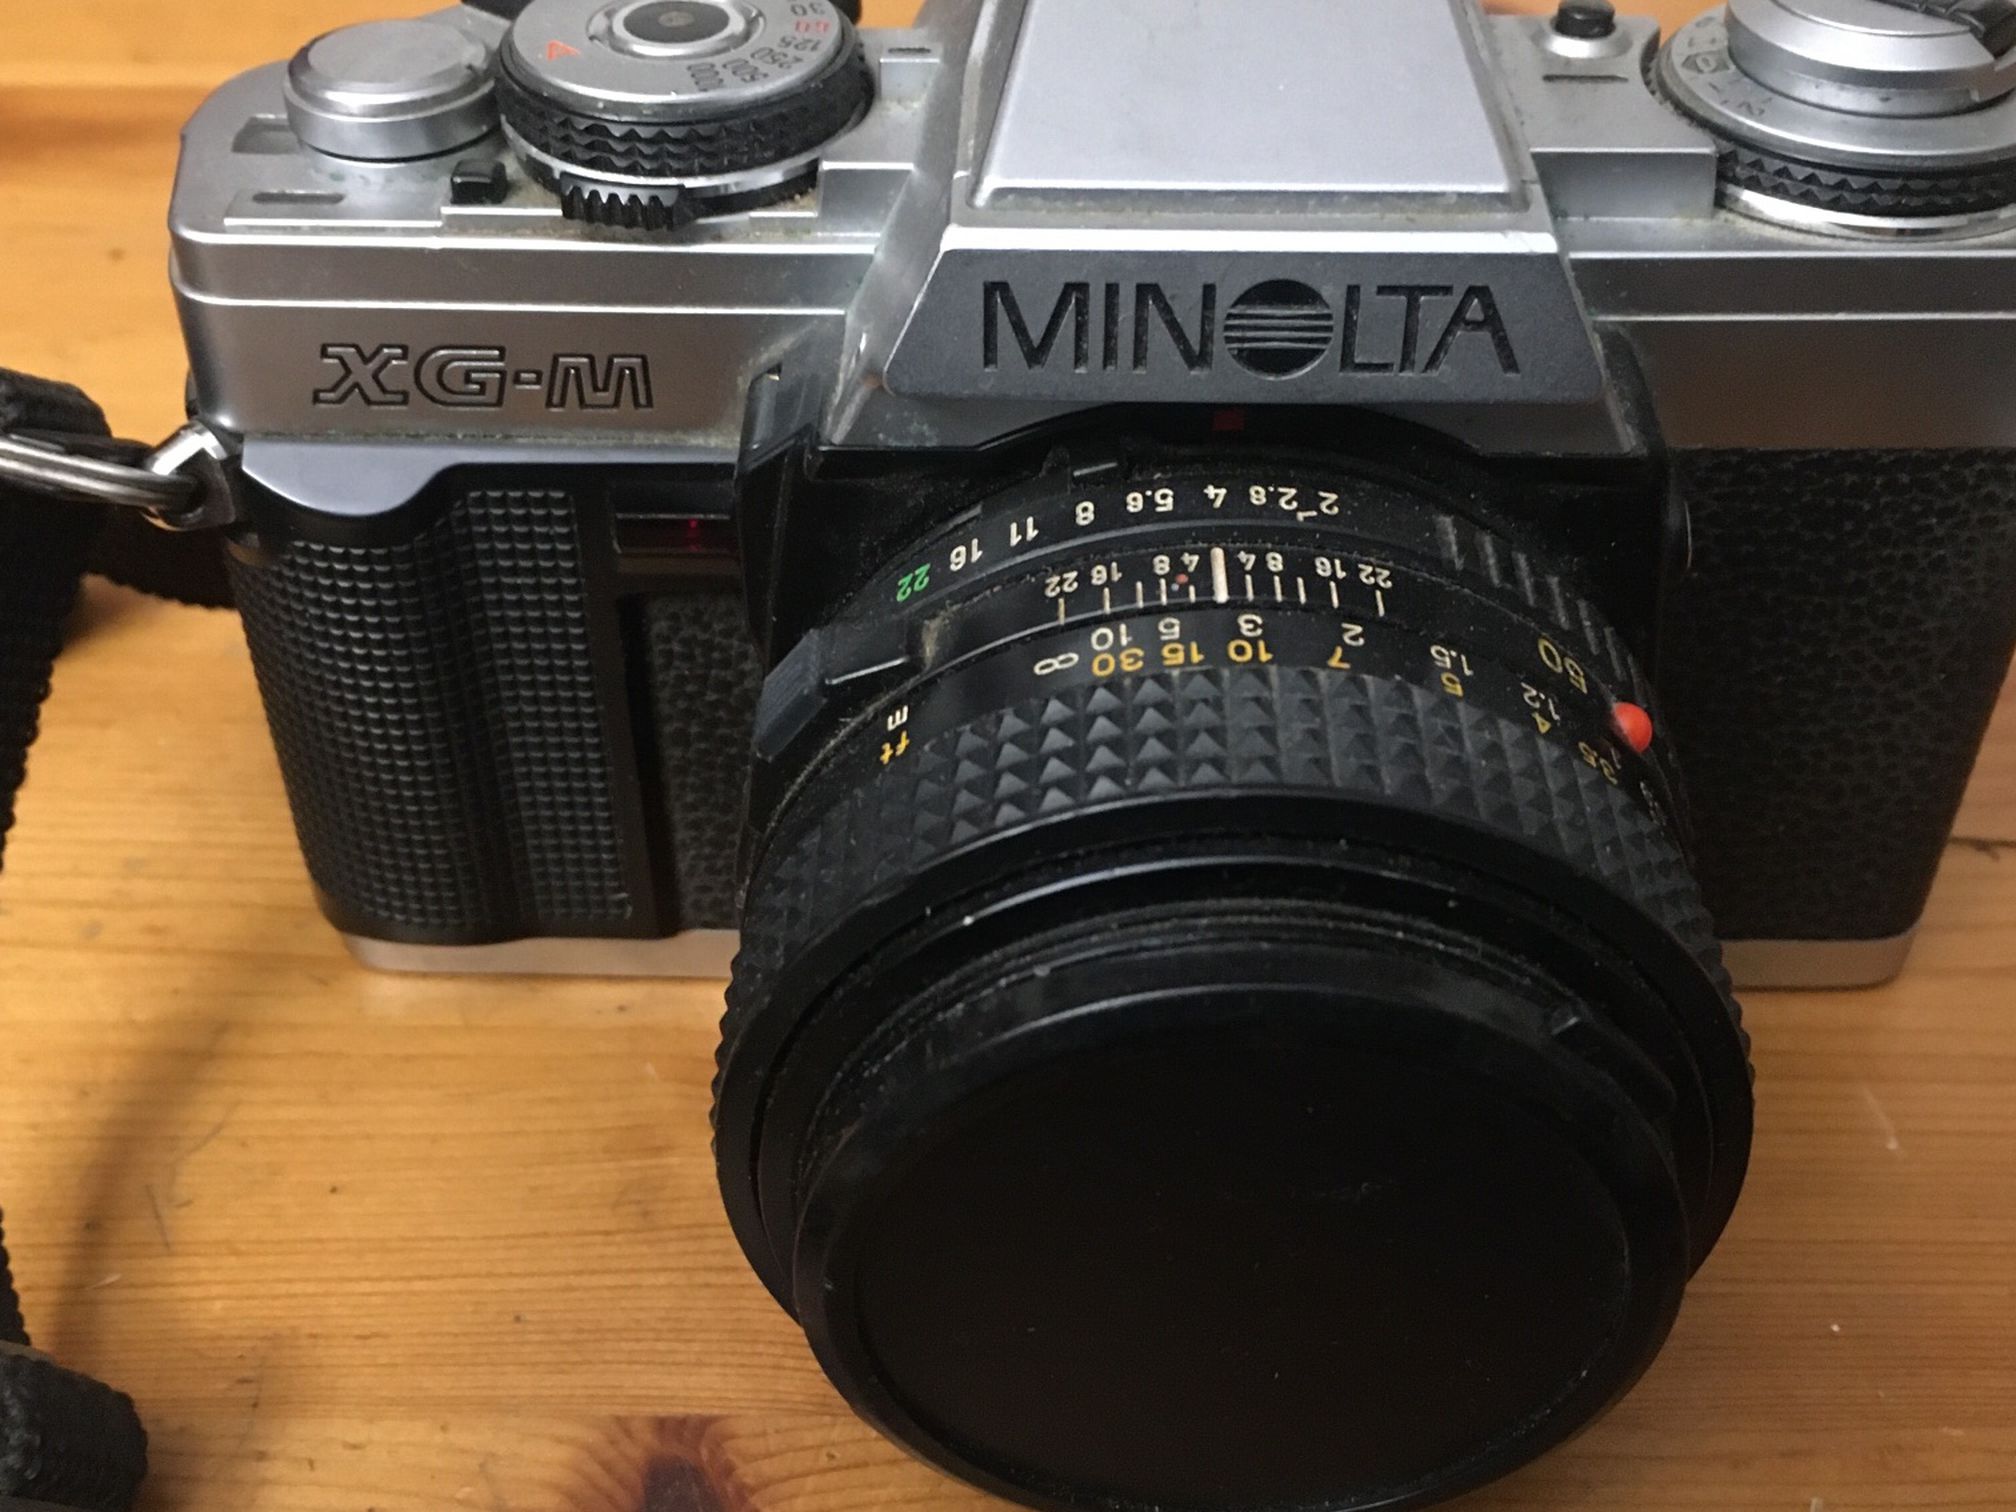 Minolta 35mm Film Camera With Flash